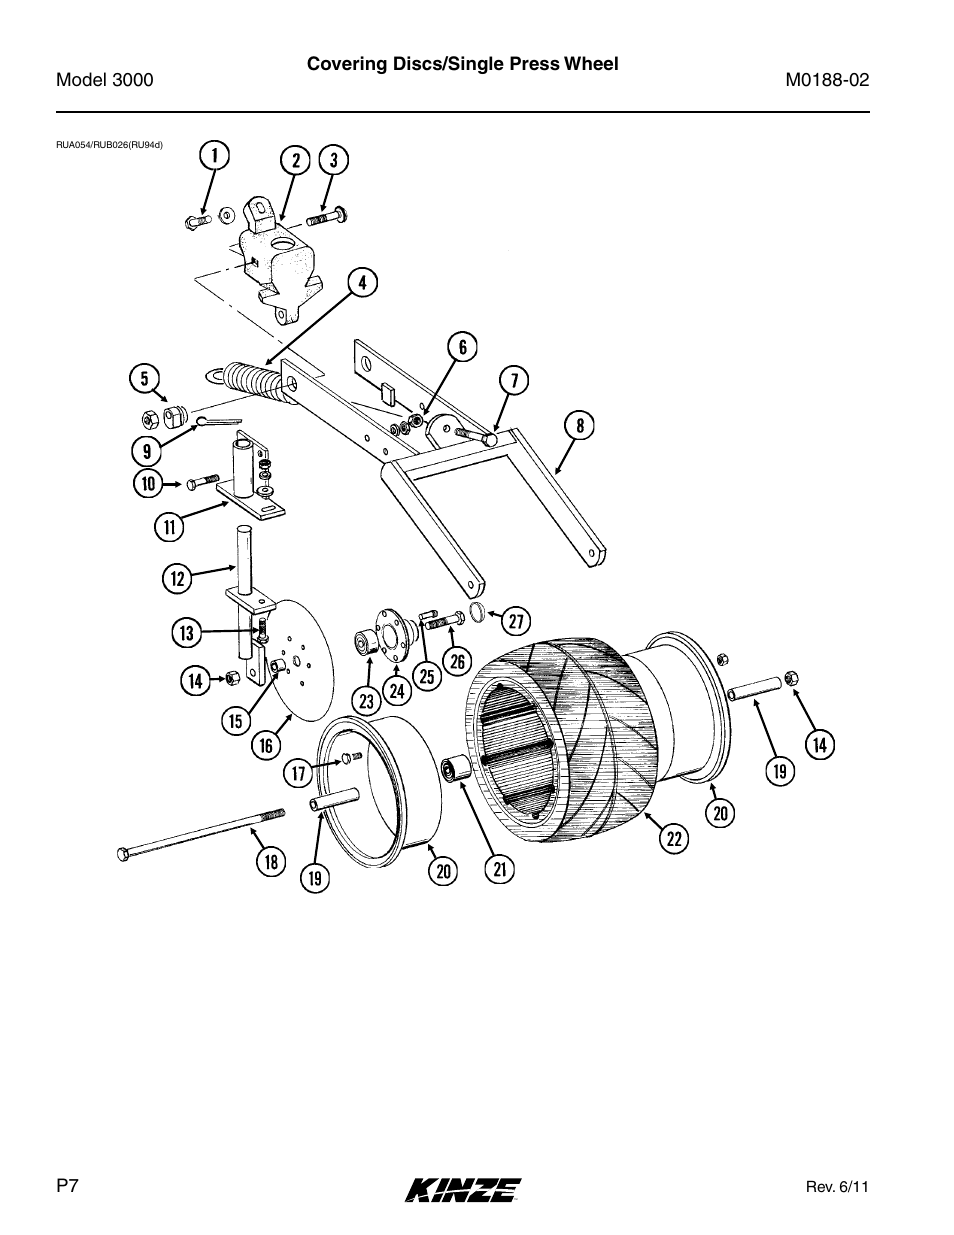 Covering discs/single press wheel | Kinze 3000 Rigid Frame Planter Rev. 5/14 User Manual | Page 10 / 154